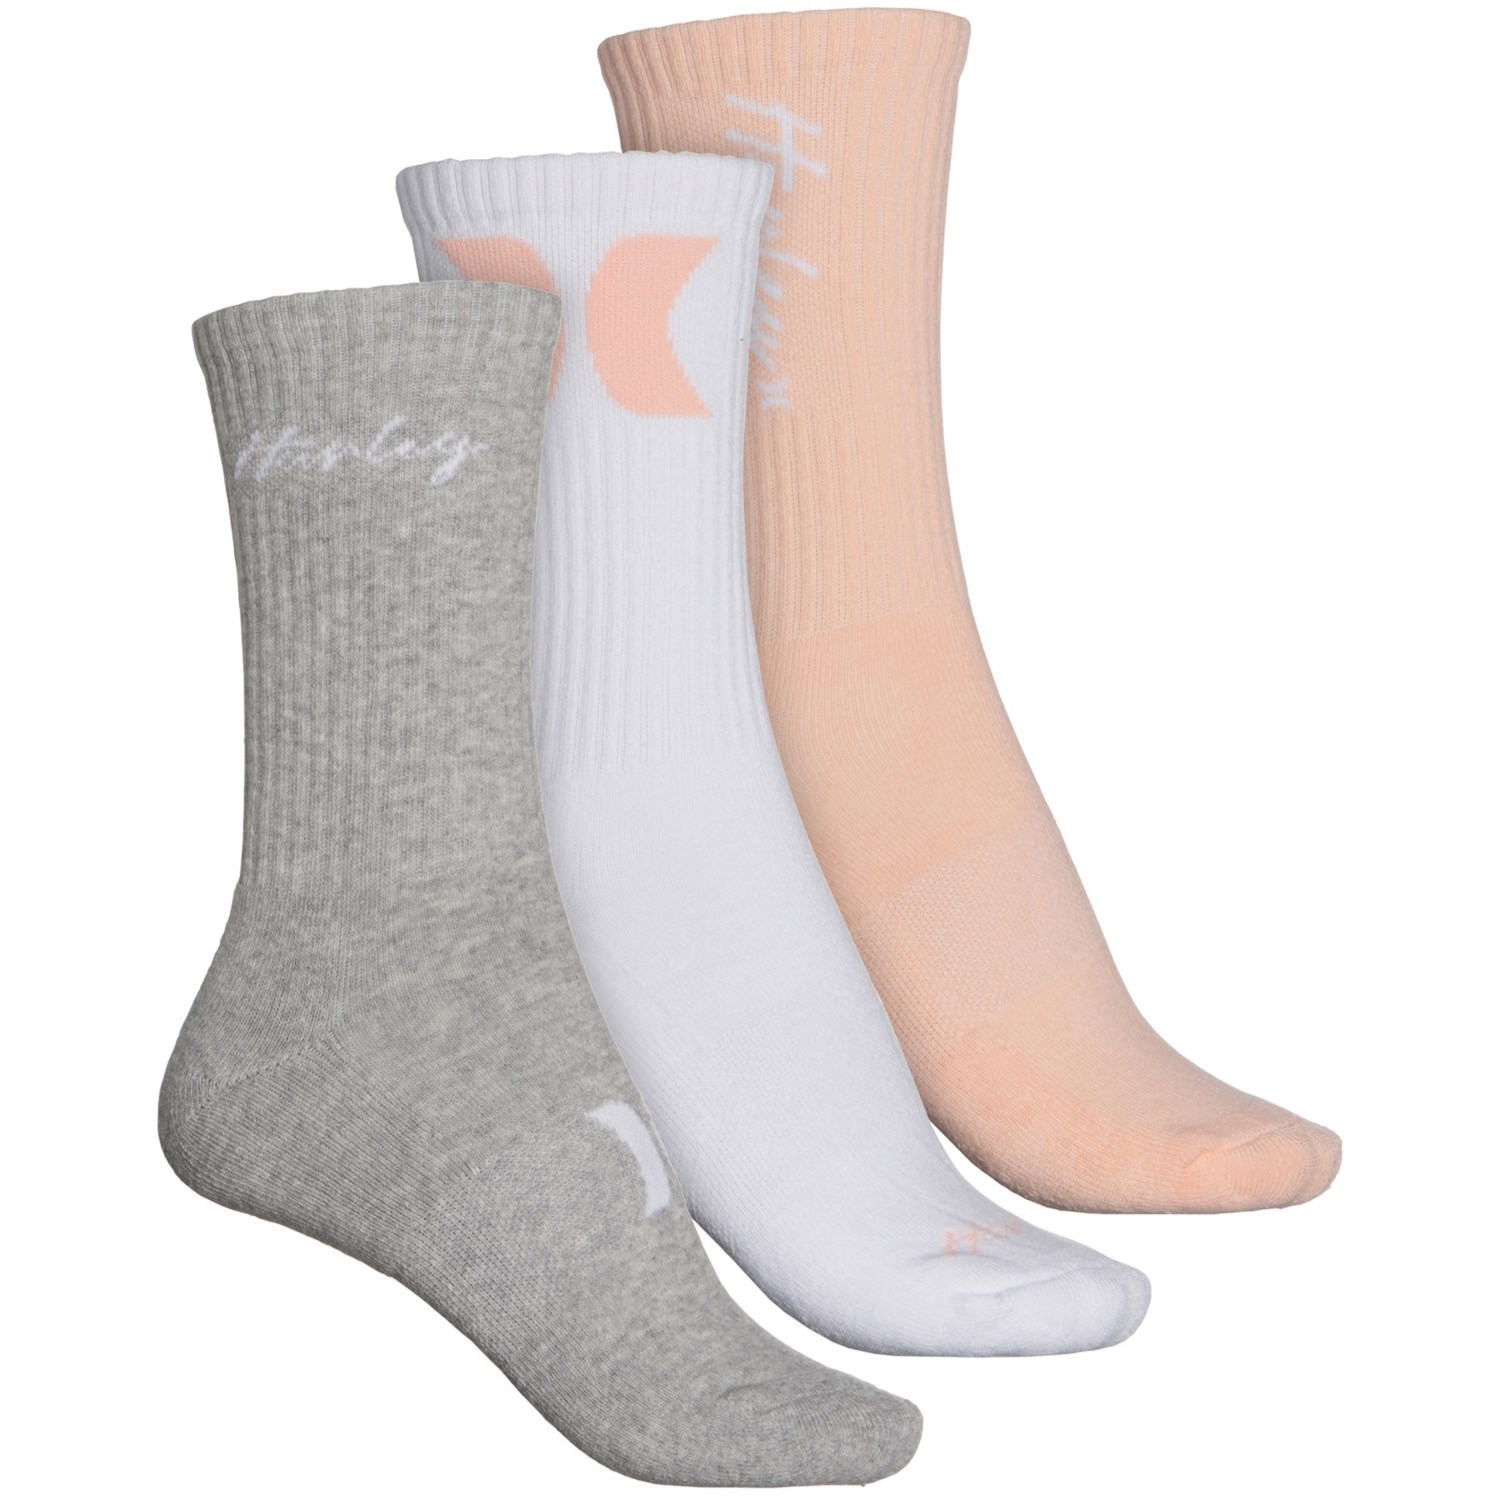 Hurley Half-Cushion Terry Athletic Socks (For Women) - Save 30%